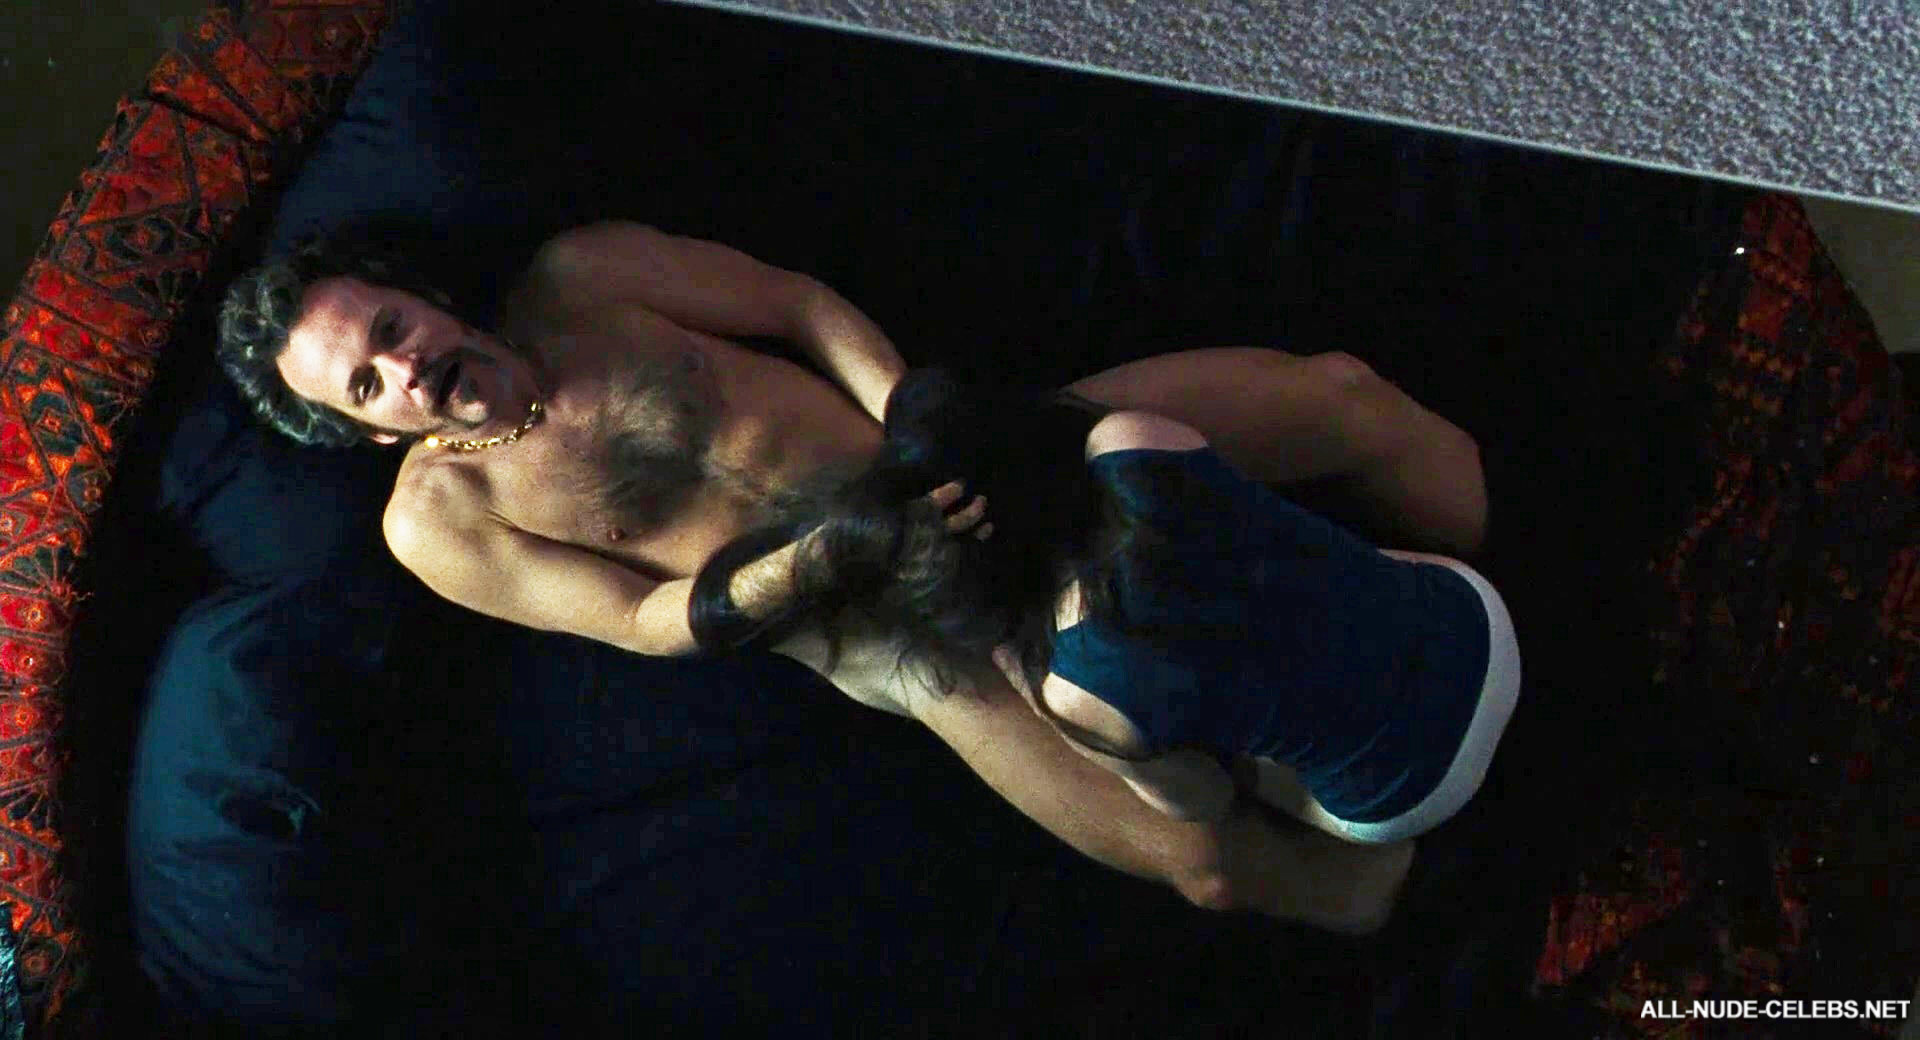 Amanda Seyfried nude movie scenes.